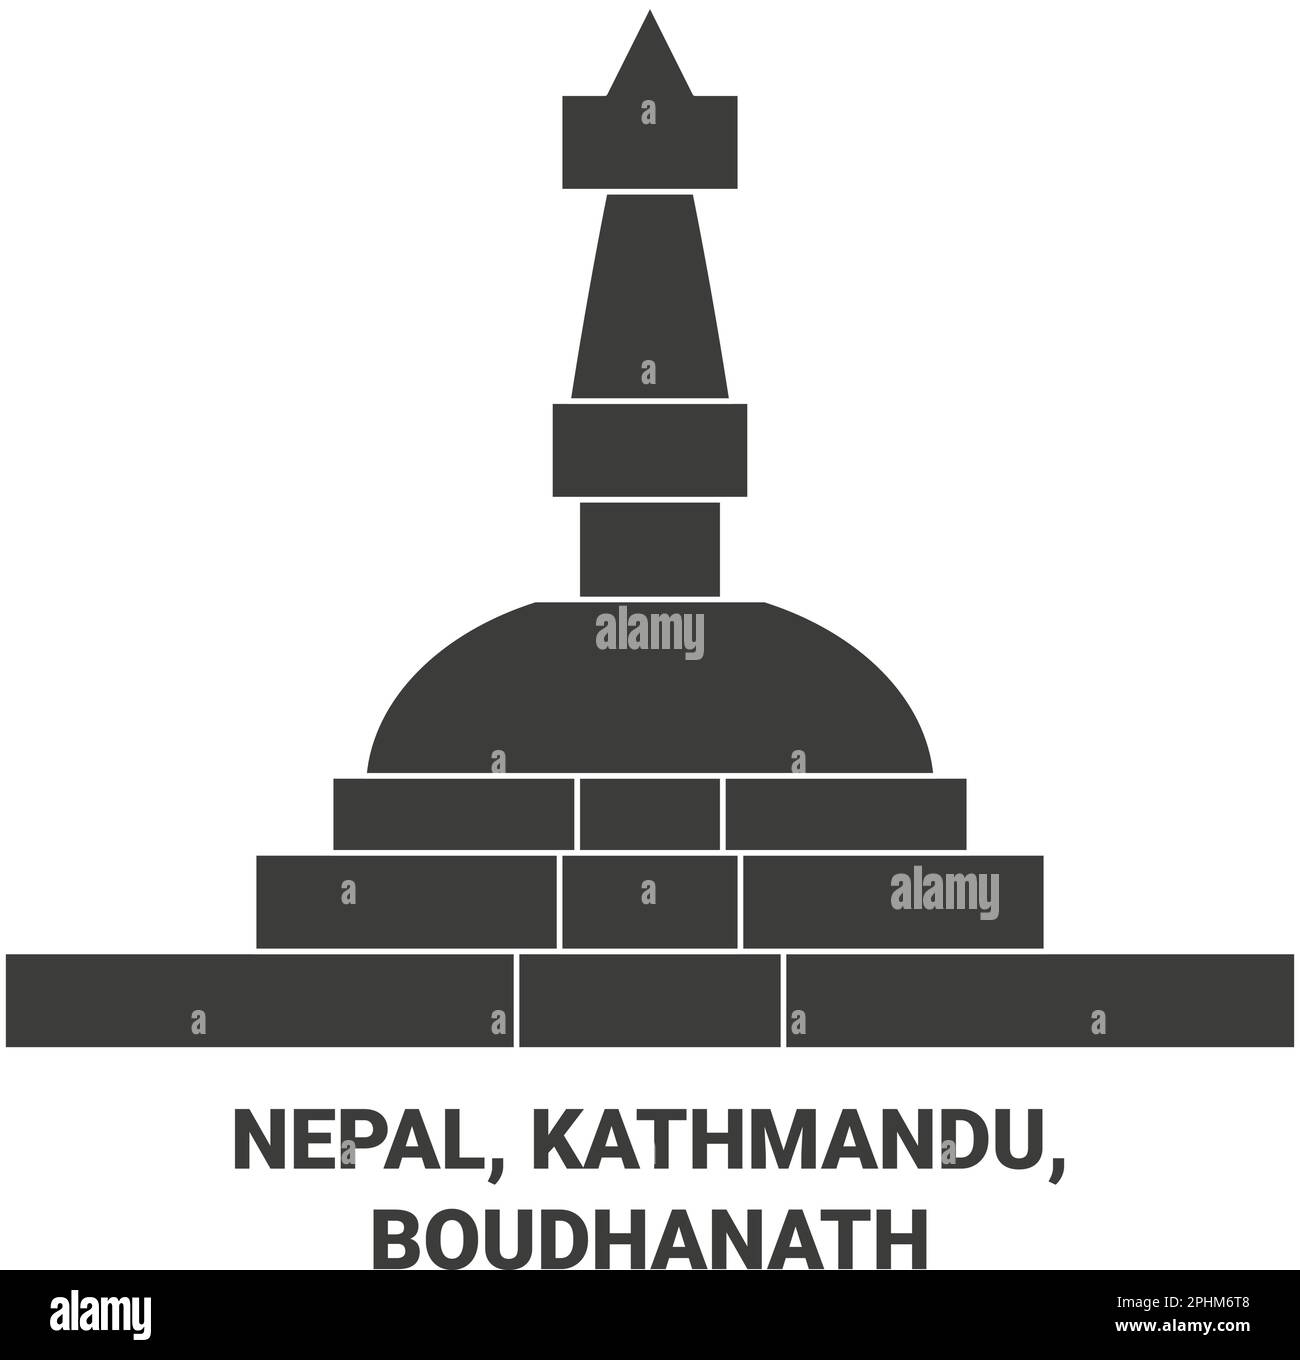 Nepal, Kathmandu, Boudhanath travel landmark vector illustration Stock Vector